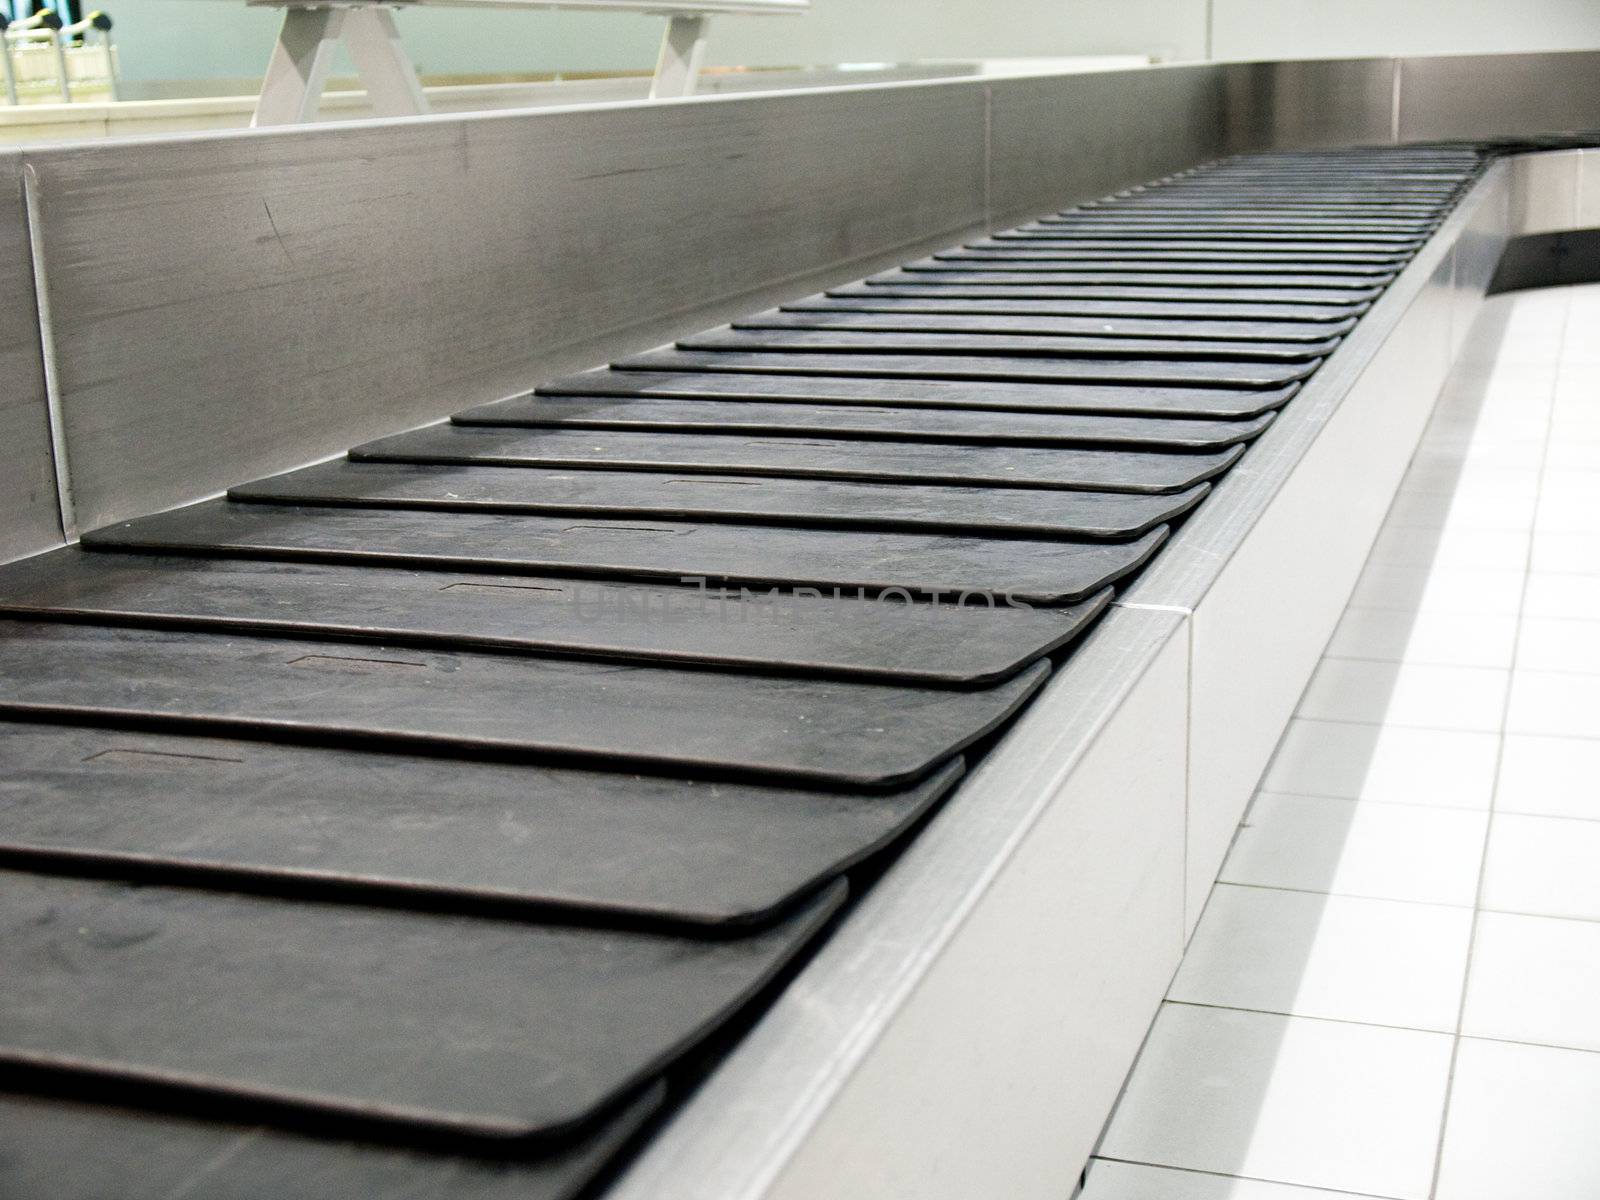 Baggage transportation belt at an airport